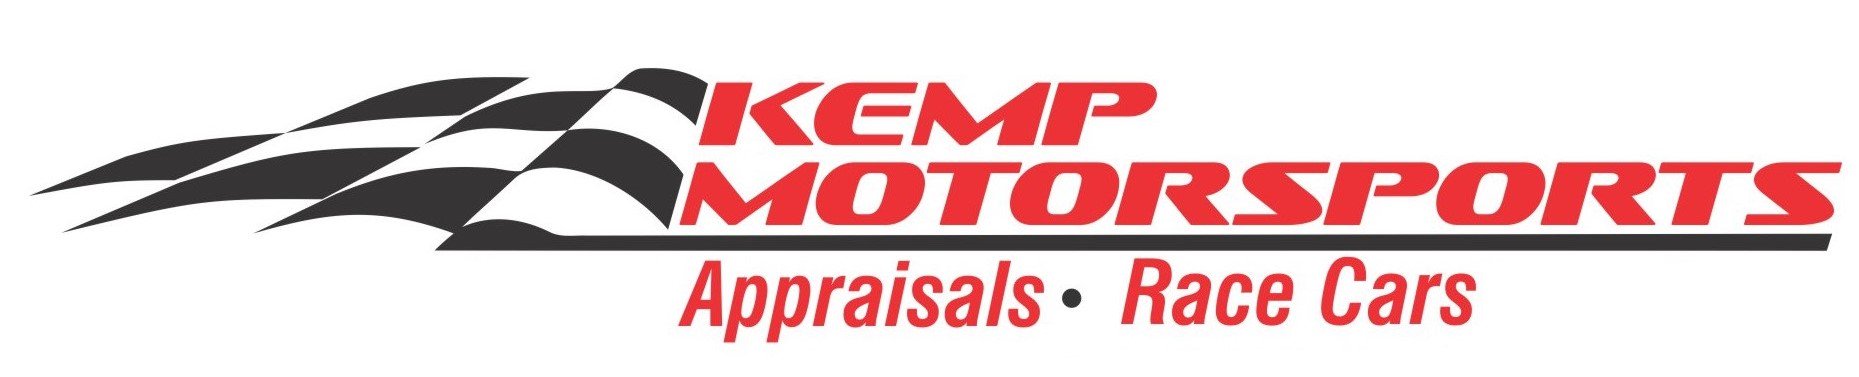 Kemp Motorsports 